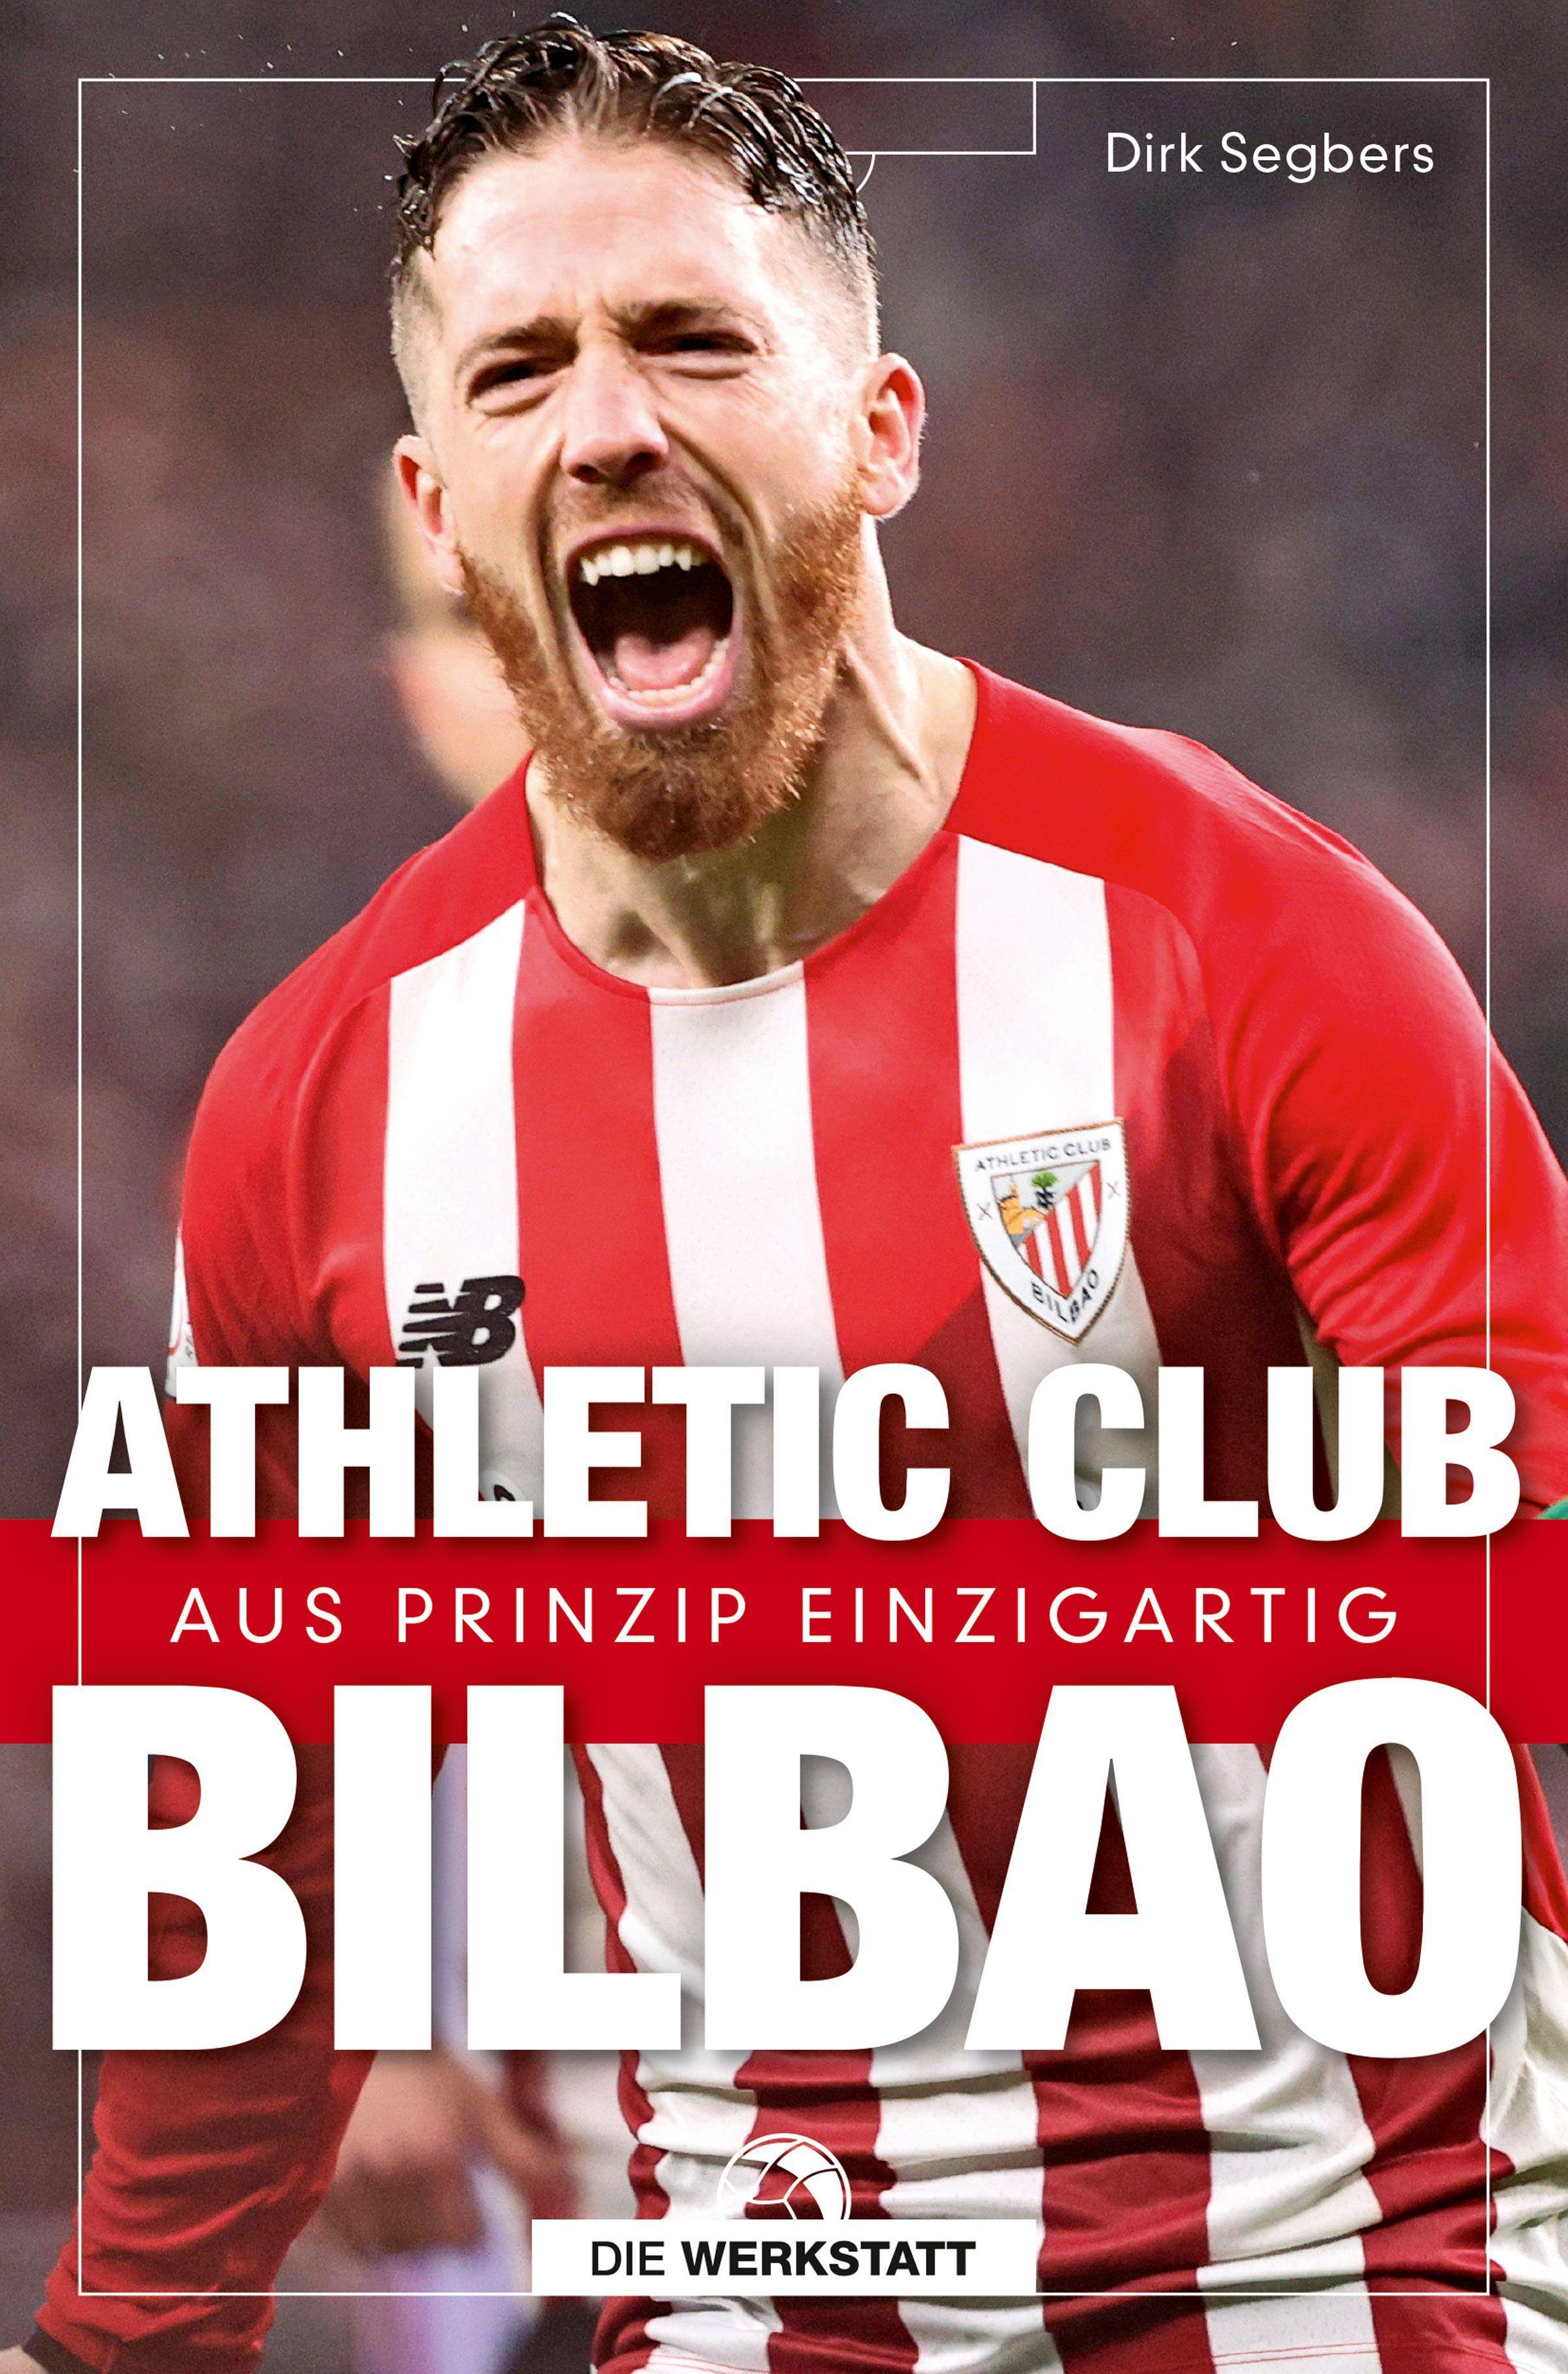 Athletic Club Bilbao Aus Prinzip einzigartig